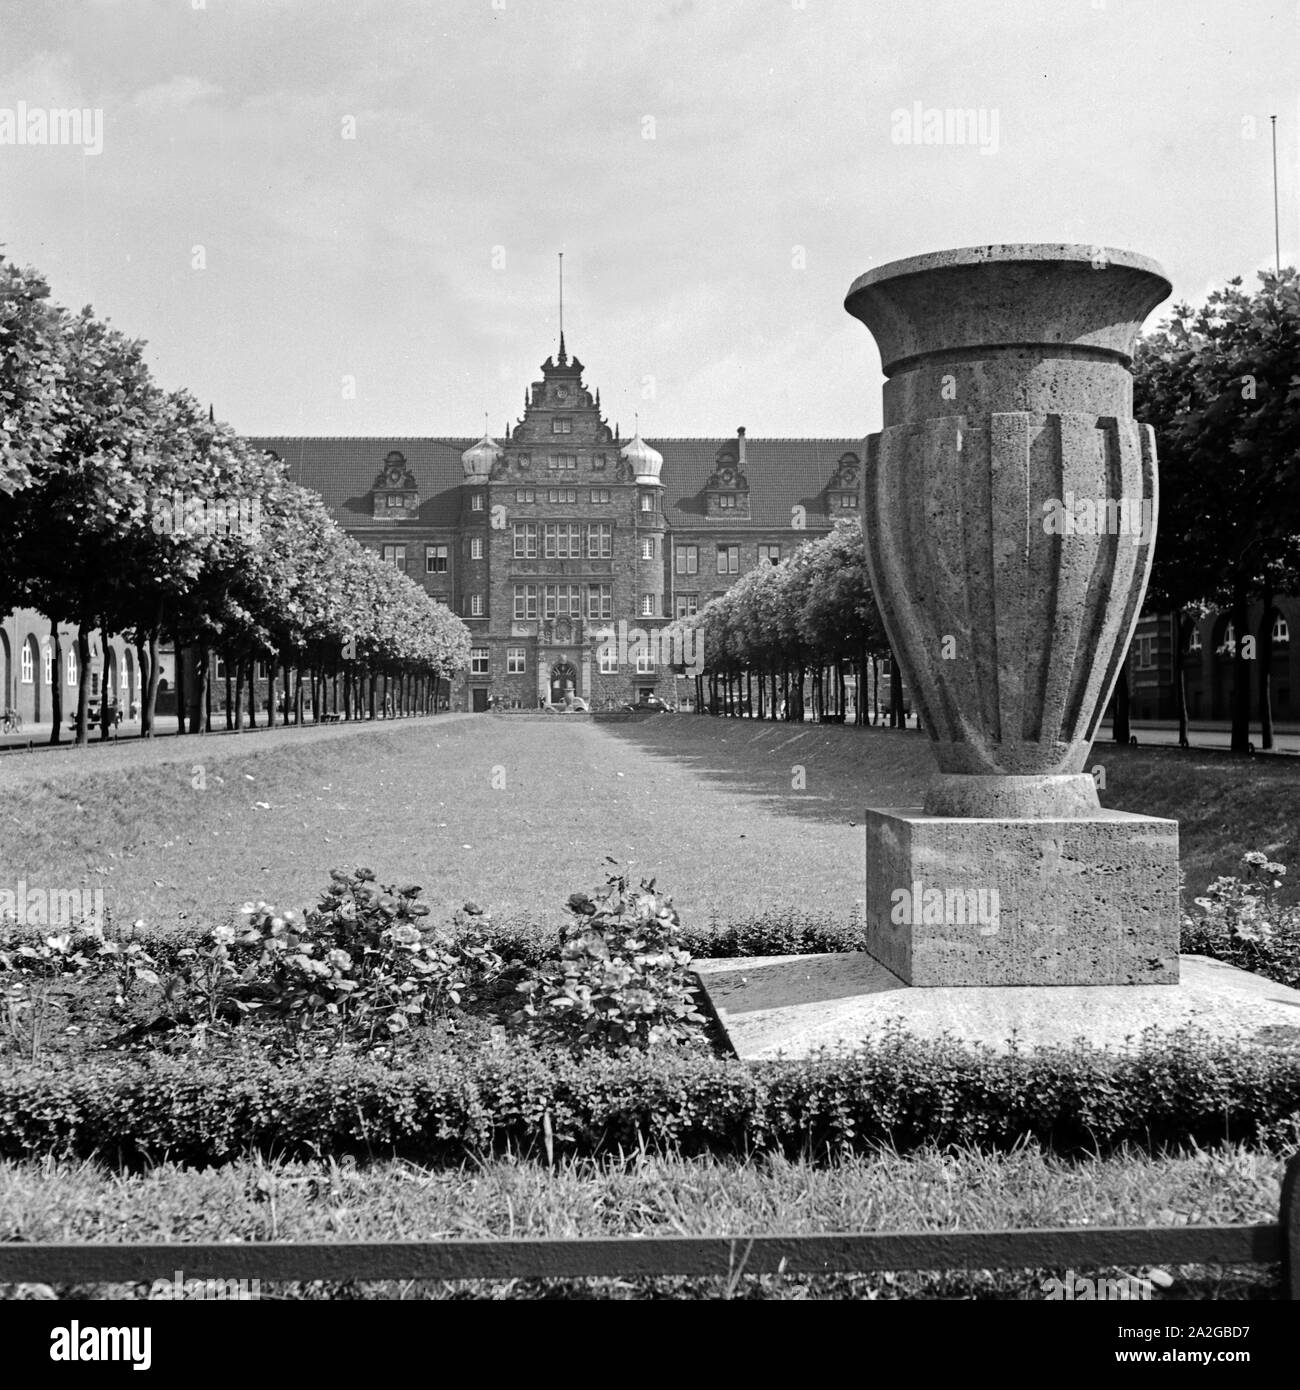 Das Amtsgericht in Oberhausen, Deutschland 1930er Jahre. Court of first instance at Oberhausen, Germany 1930s. Stock Photo